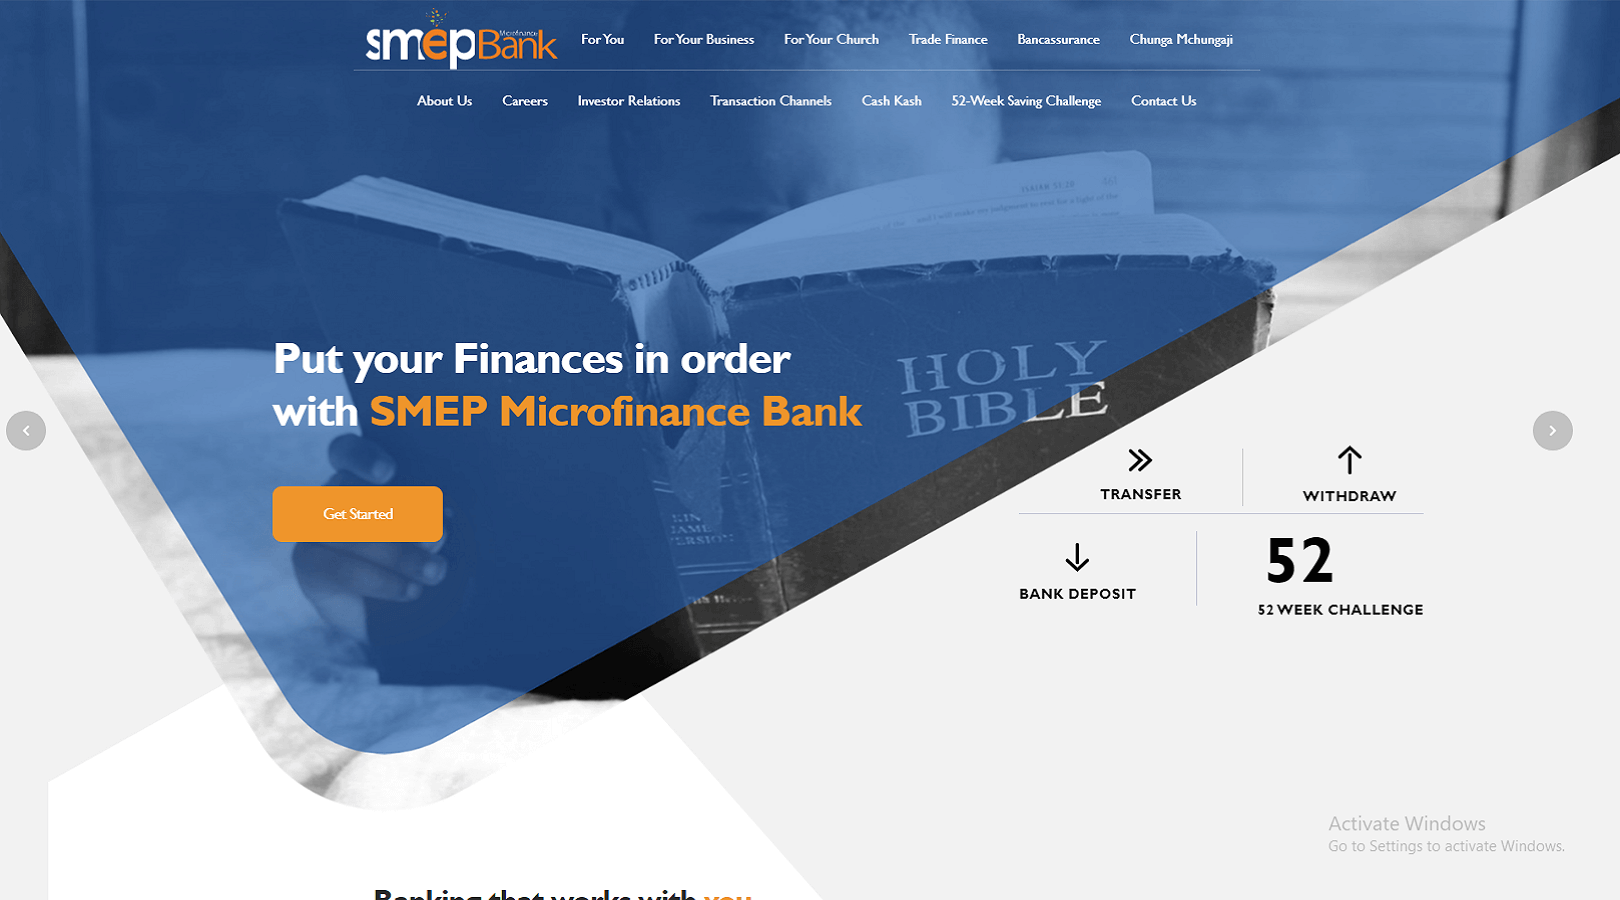 SMEP Microfinance